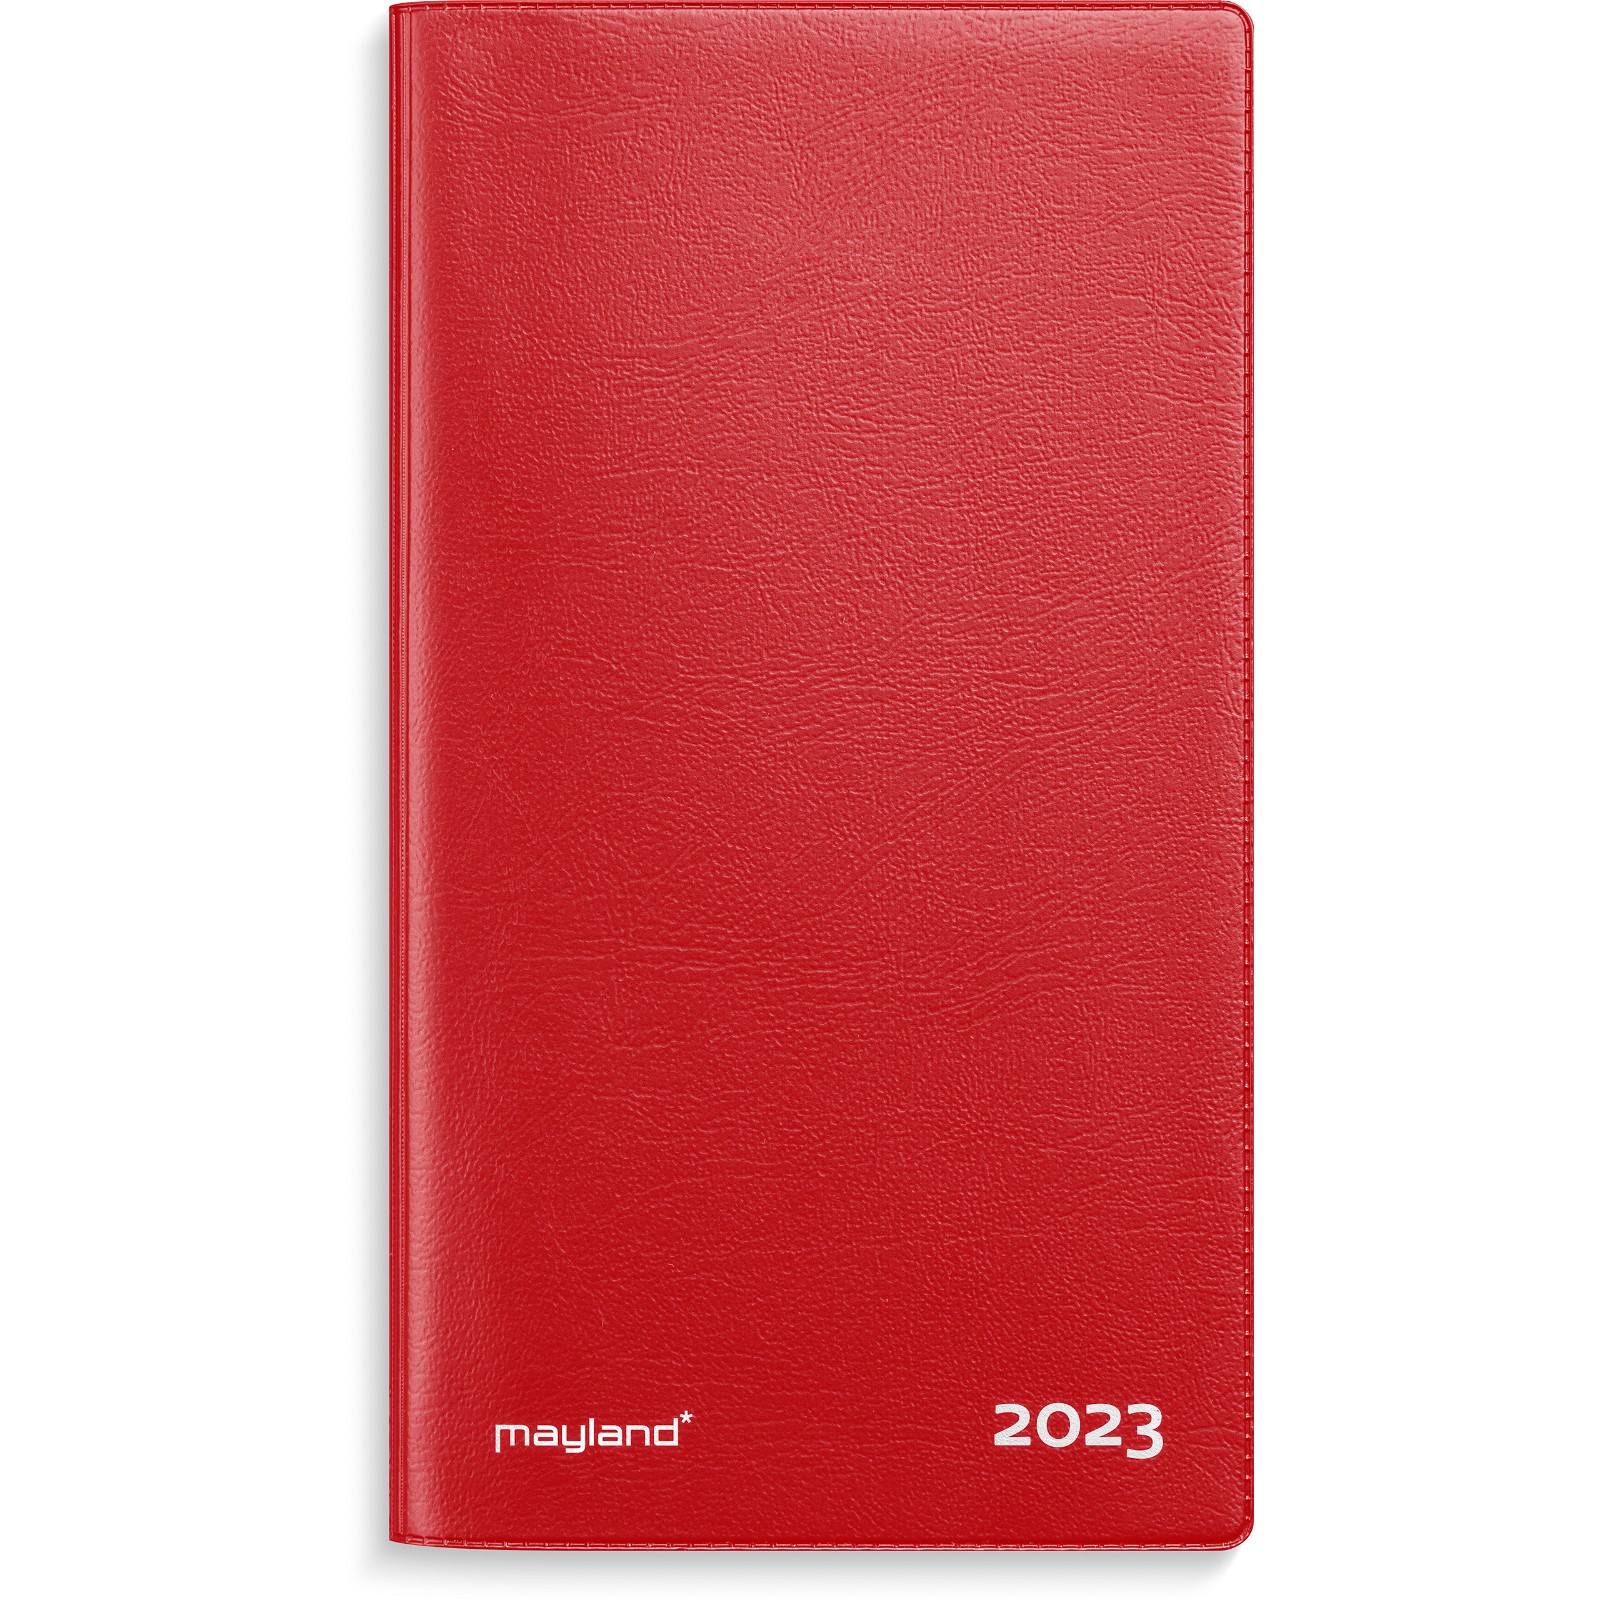 Mayland indexkalender 17x9,5x0,5 cm rød